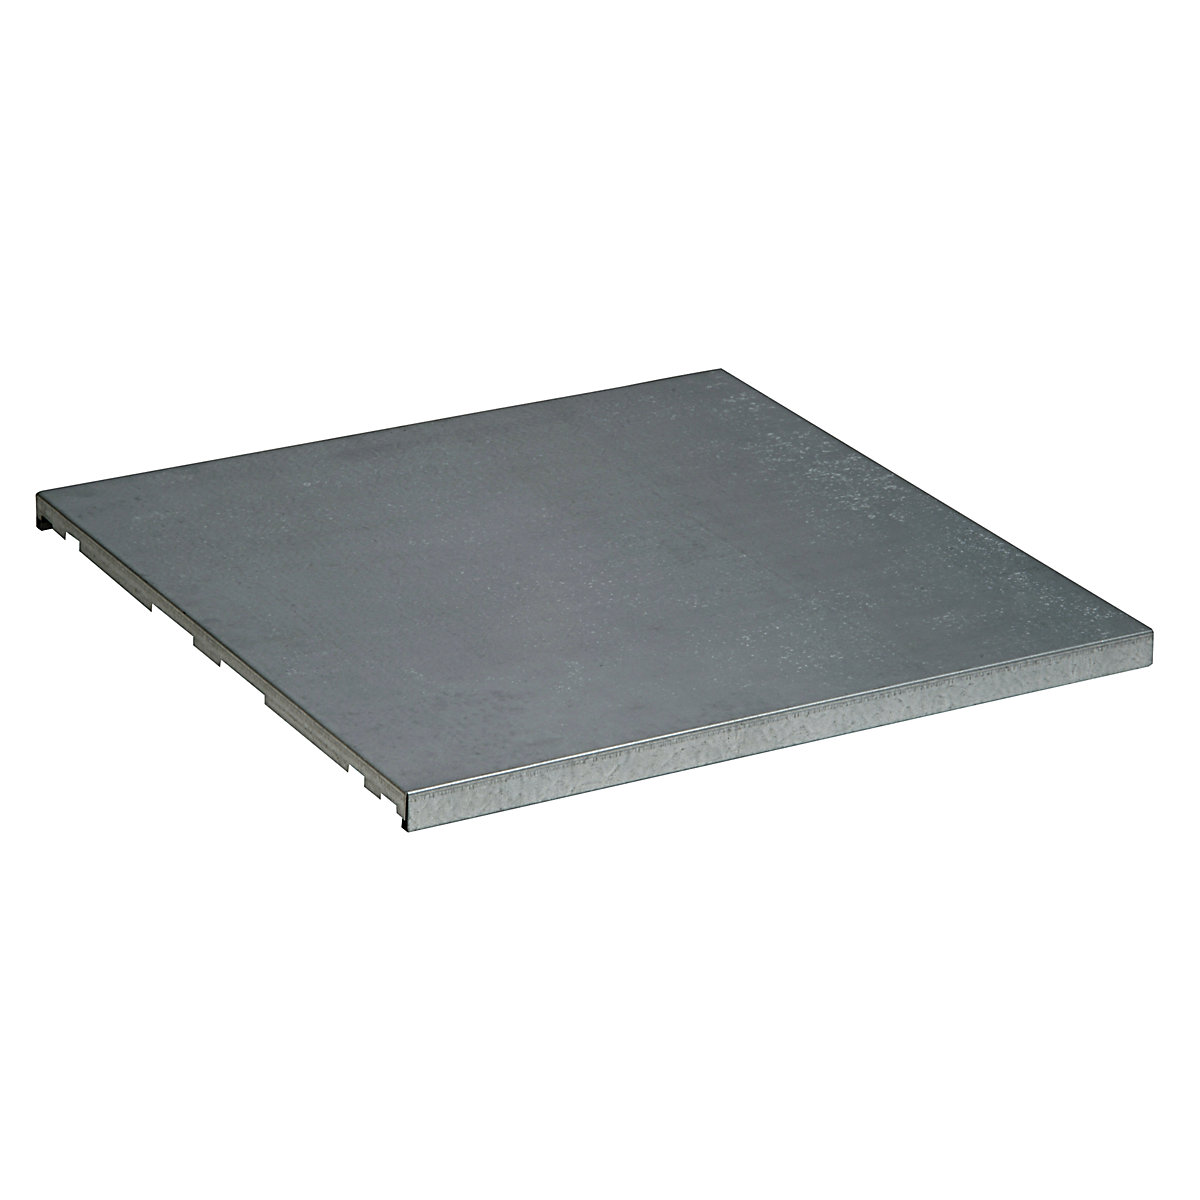 Shelf, zinc plated – Justrite